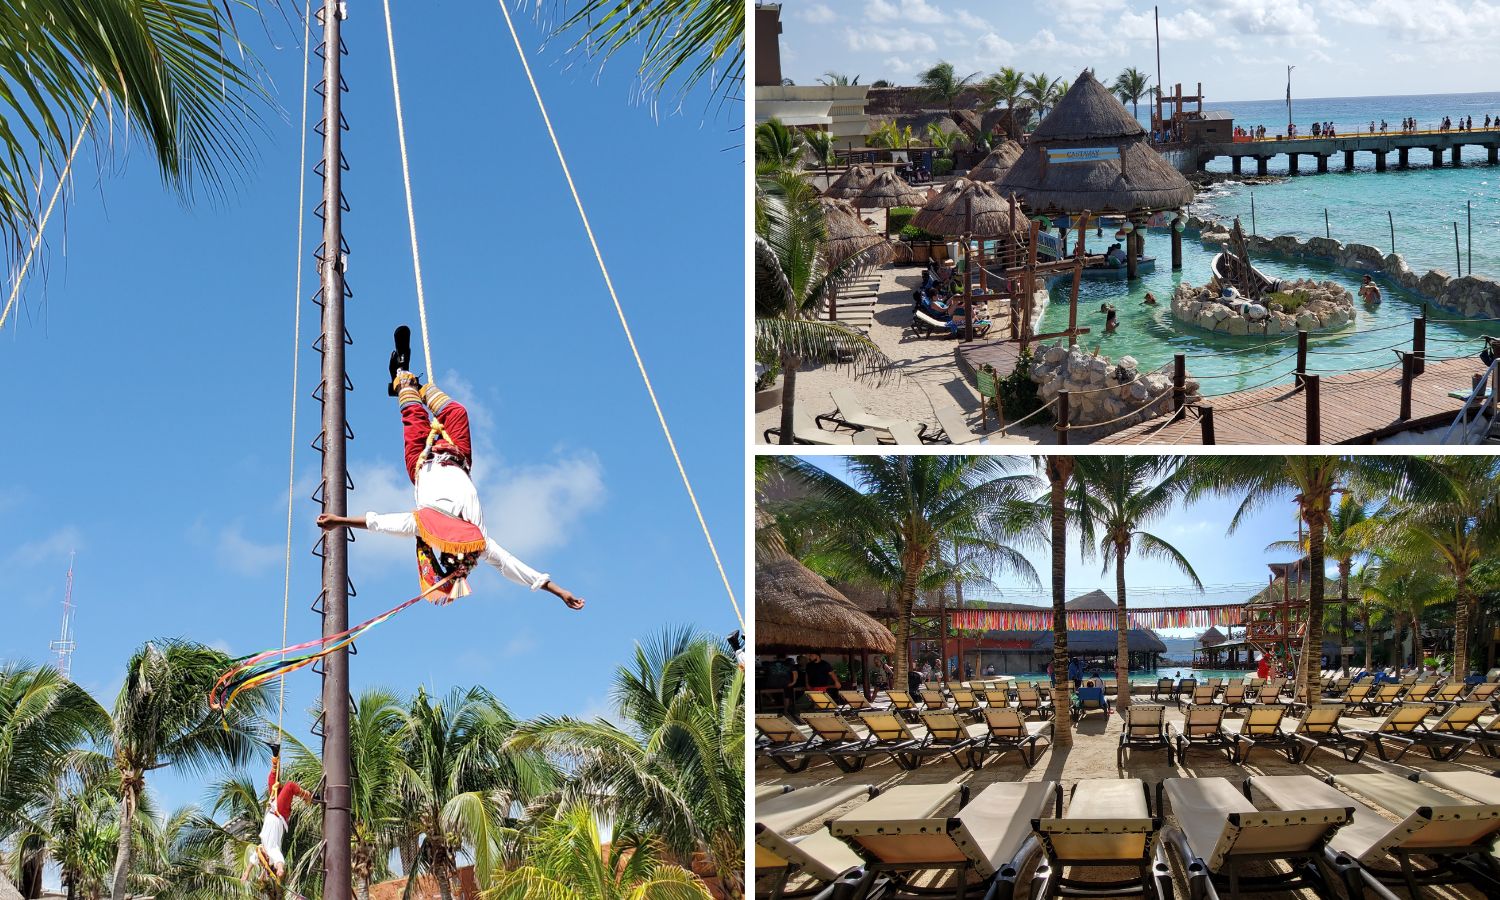 Costa Maya cruise port pool, shops, and more